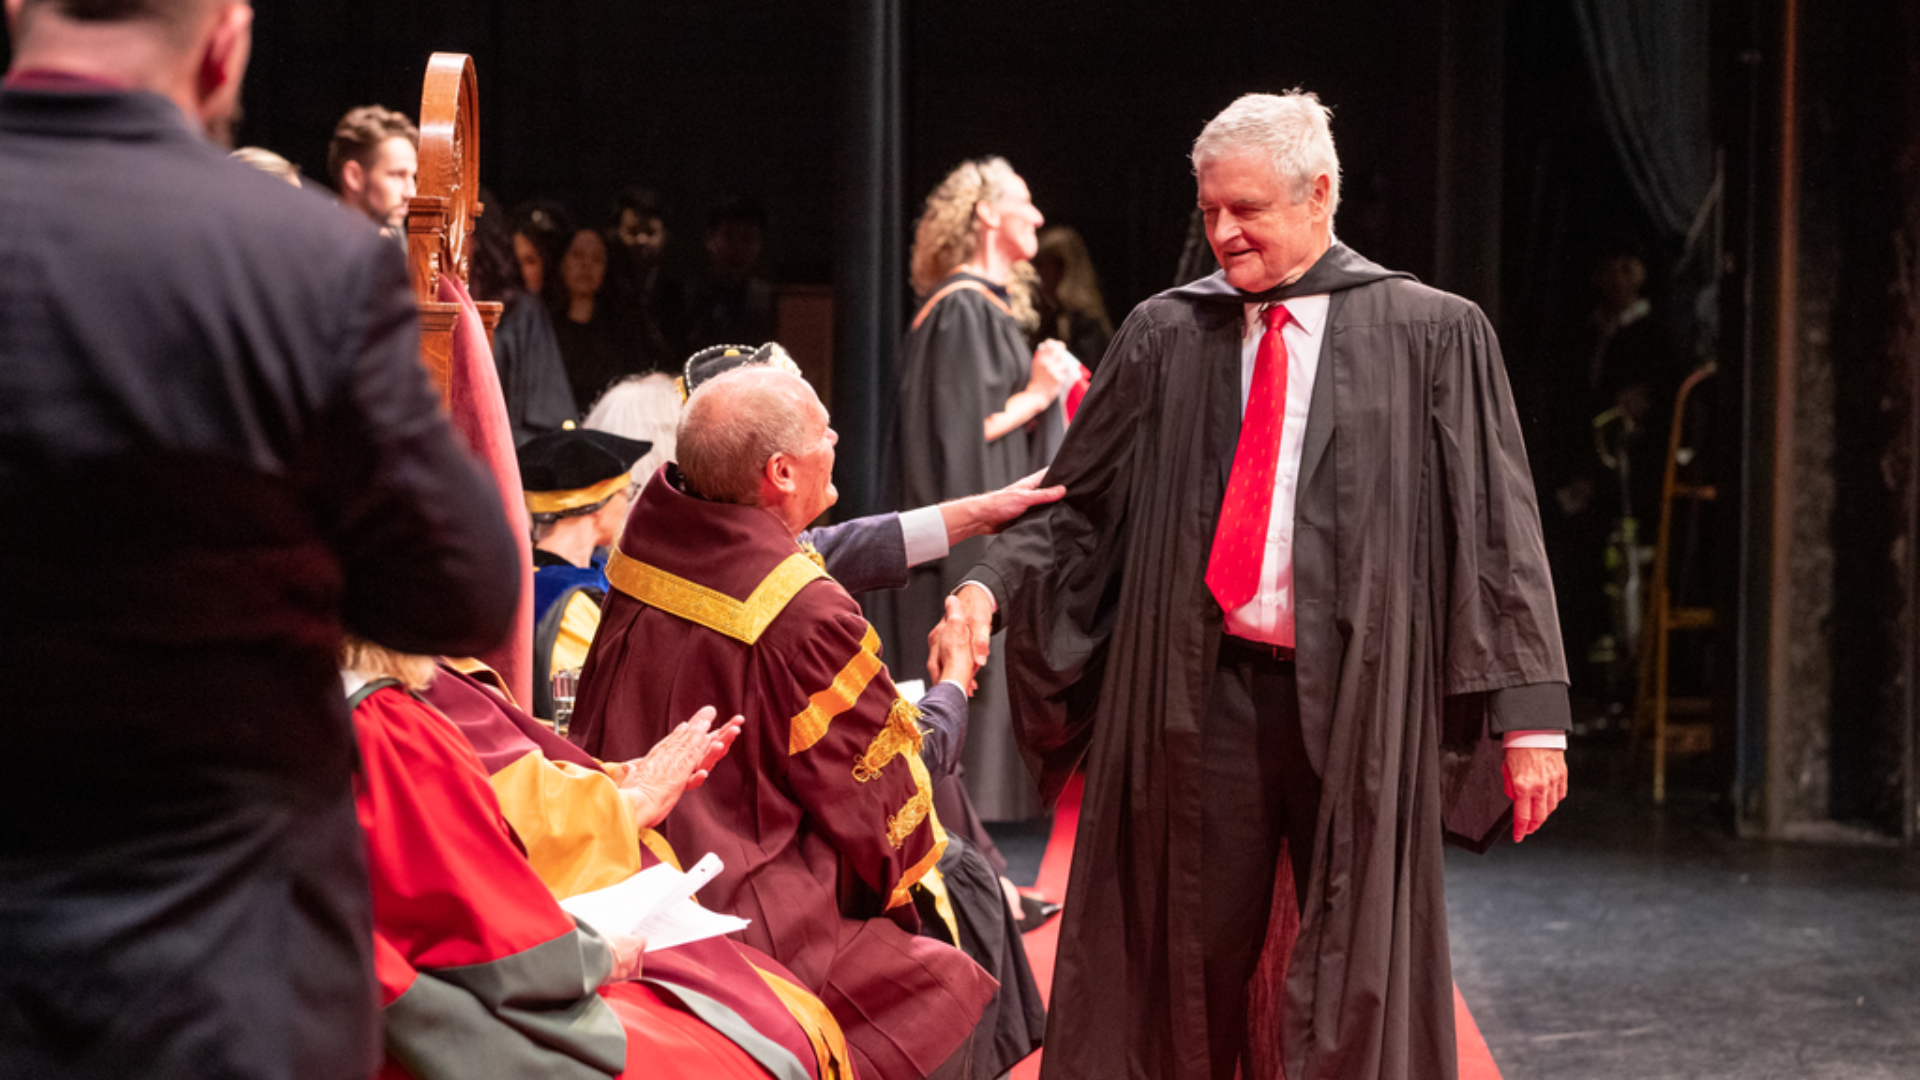 A graduate shakes the hand of David Farrar